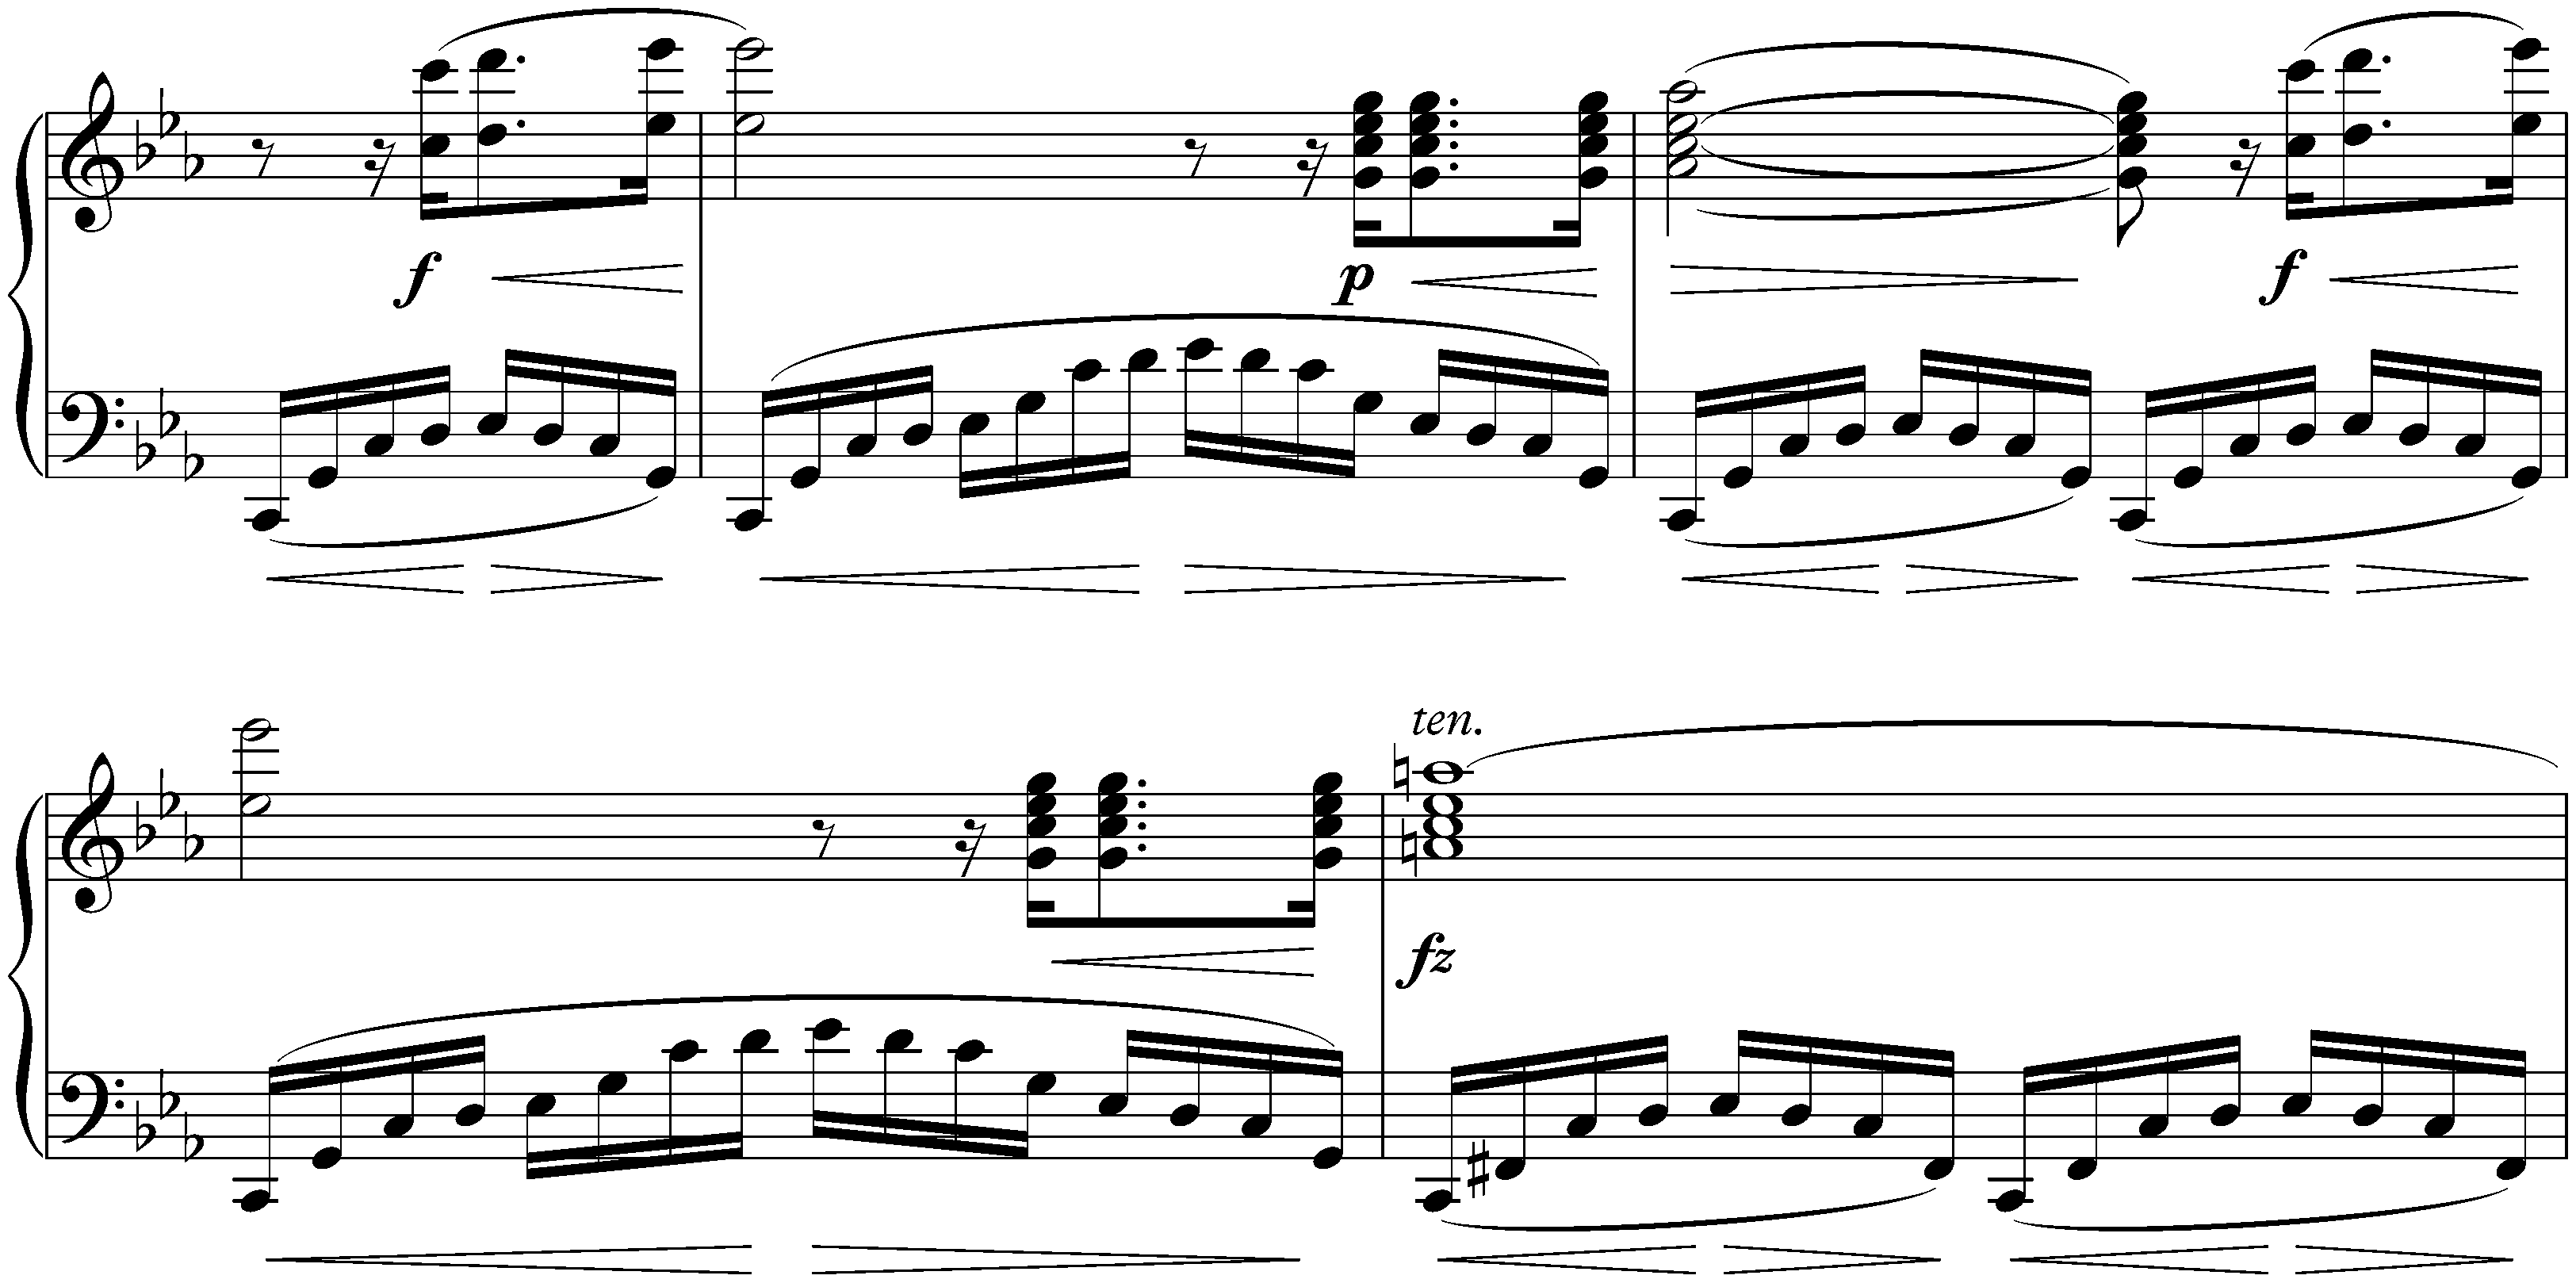 Twelve Études, op. 10; 12. C minor